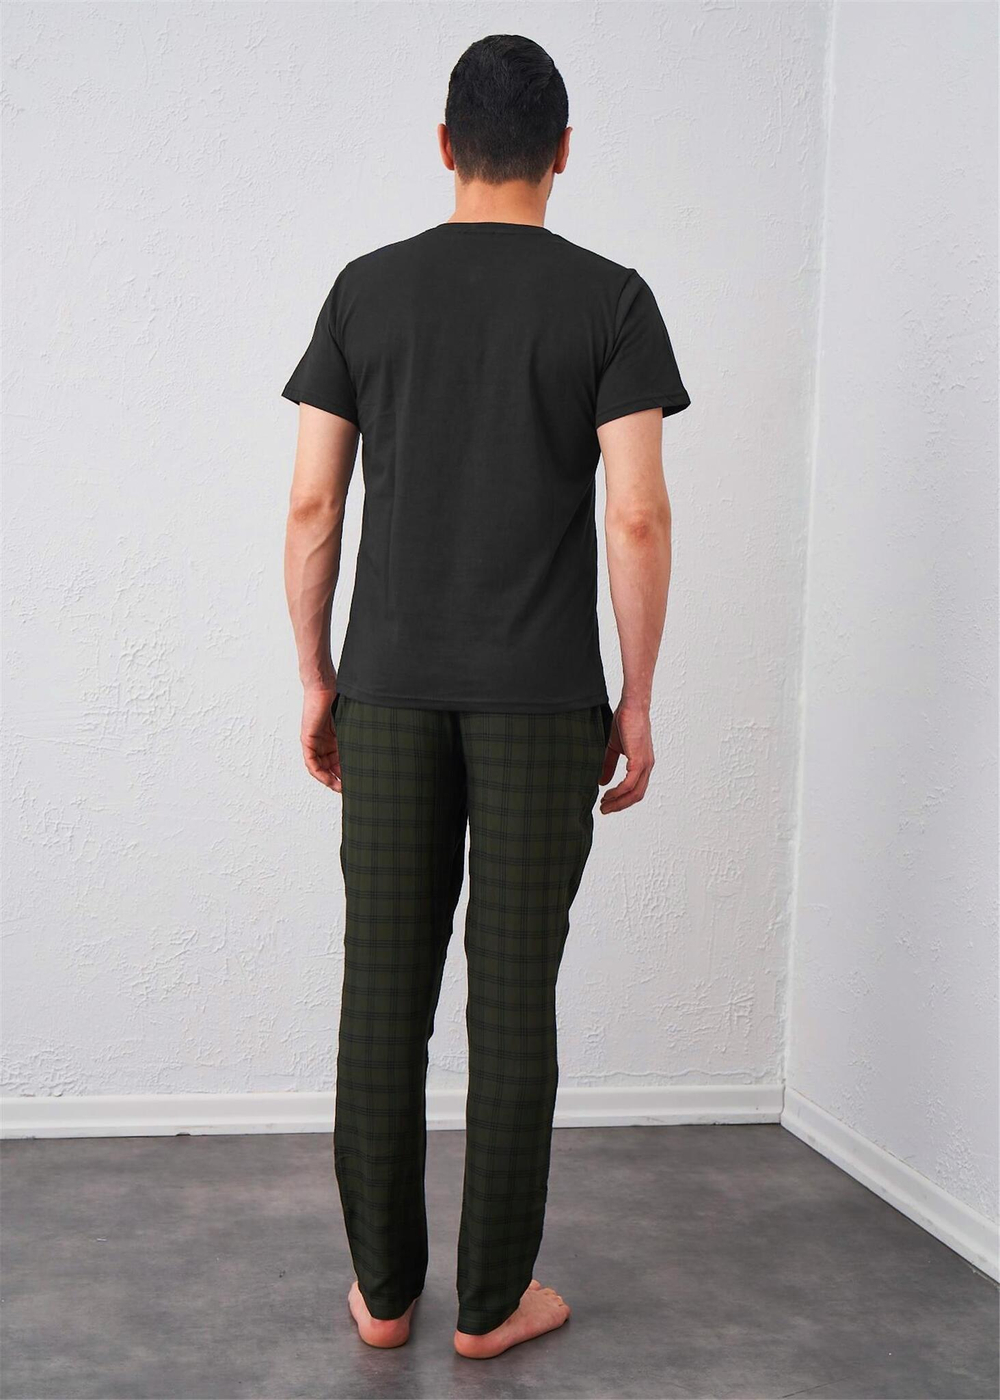 RELAX MODE - Пижама мужская пижама мужская со штанами - 10718